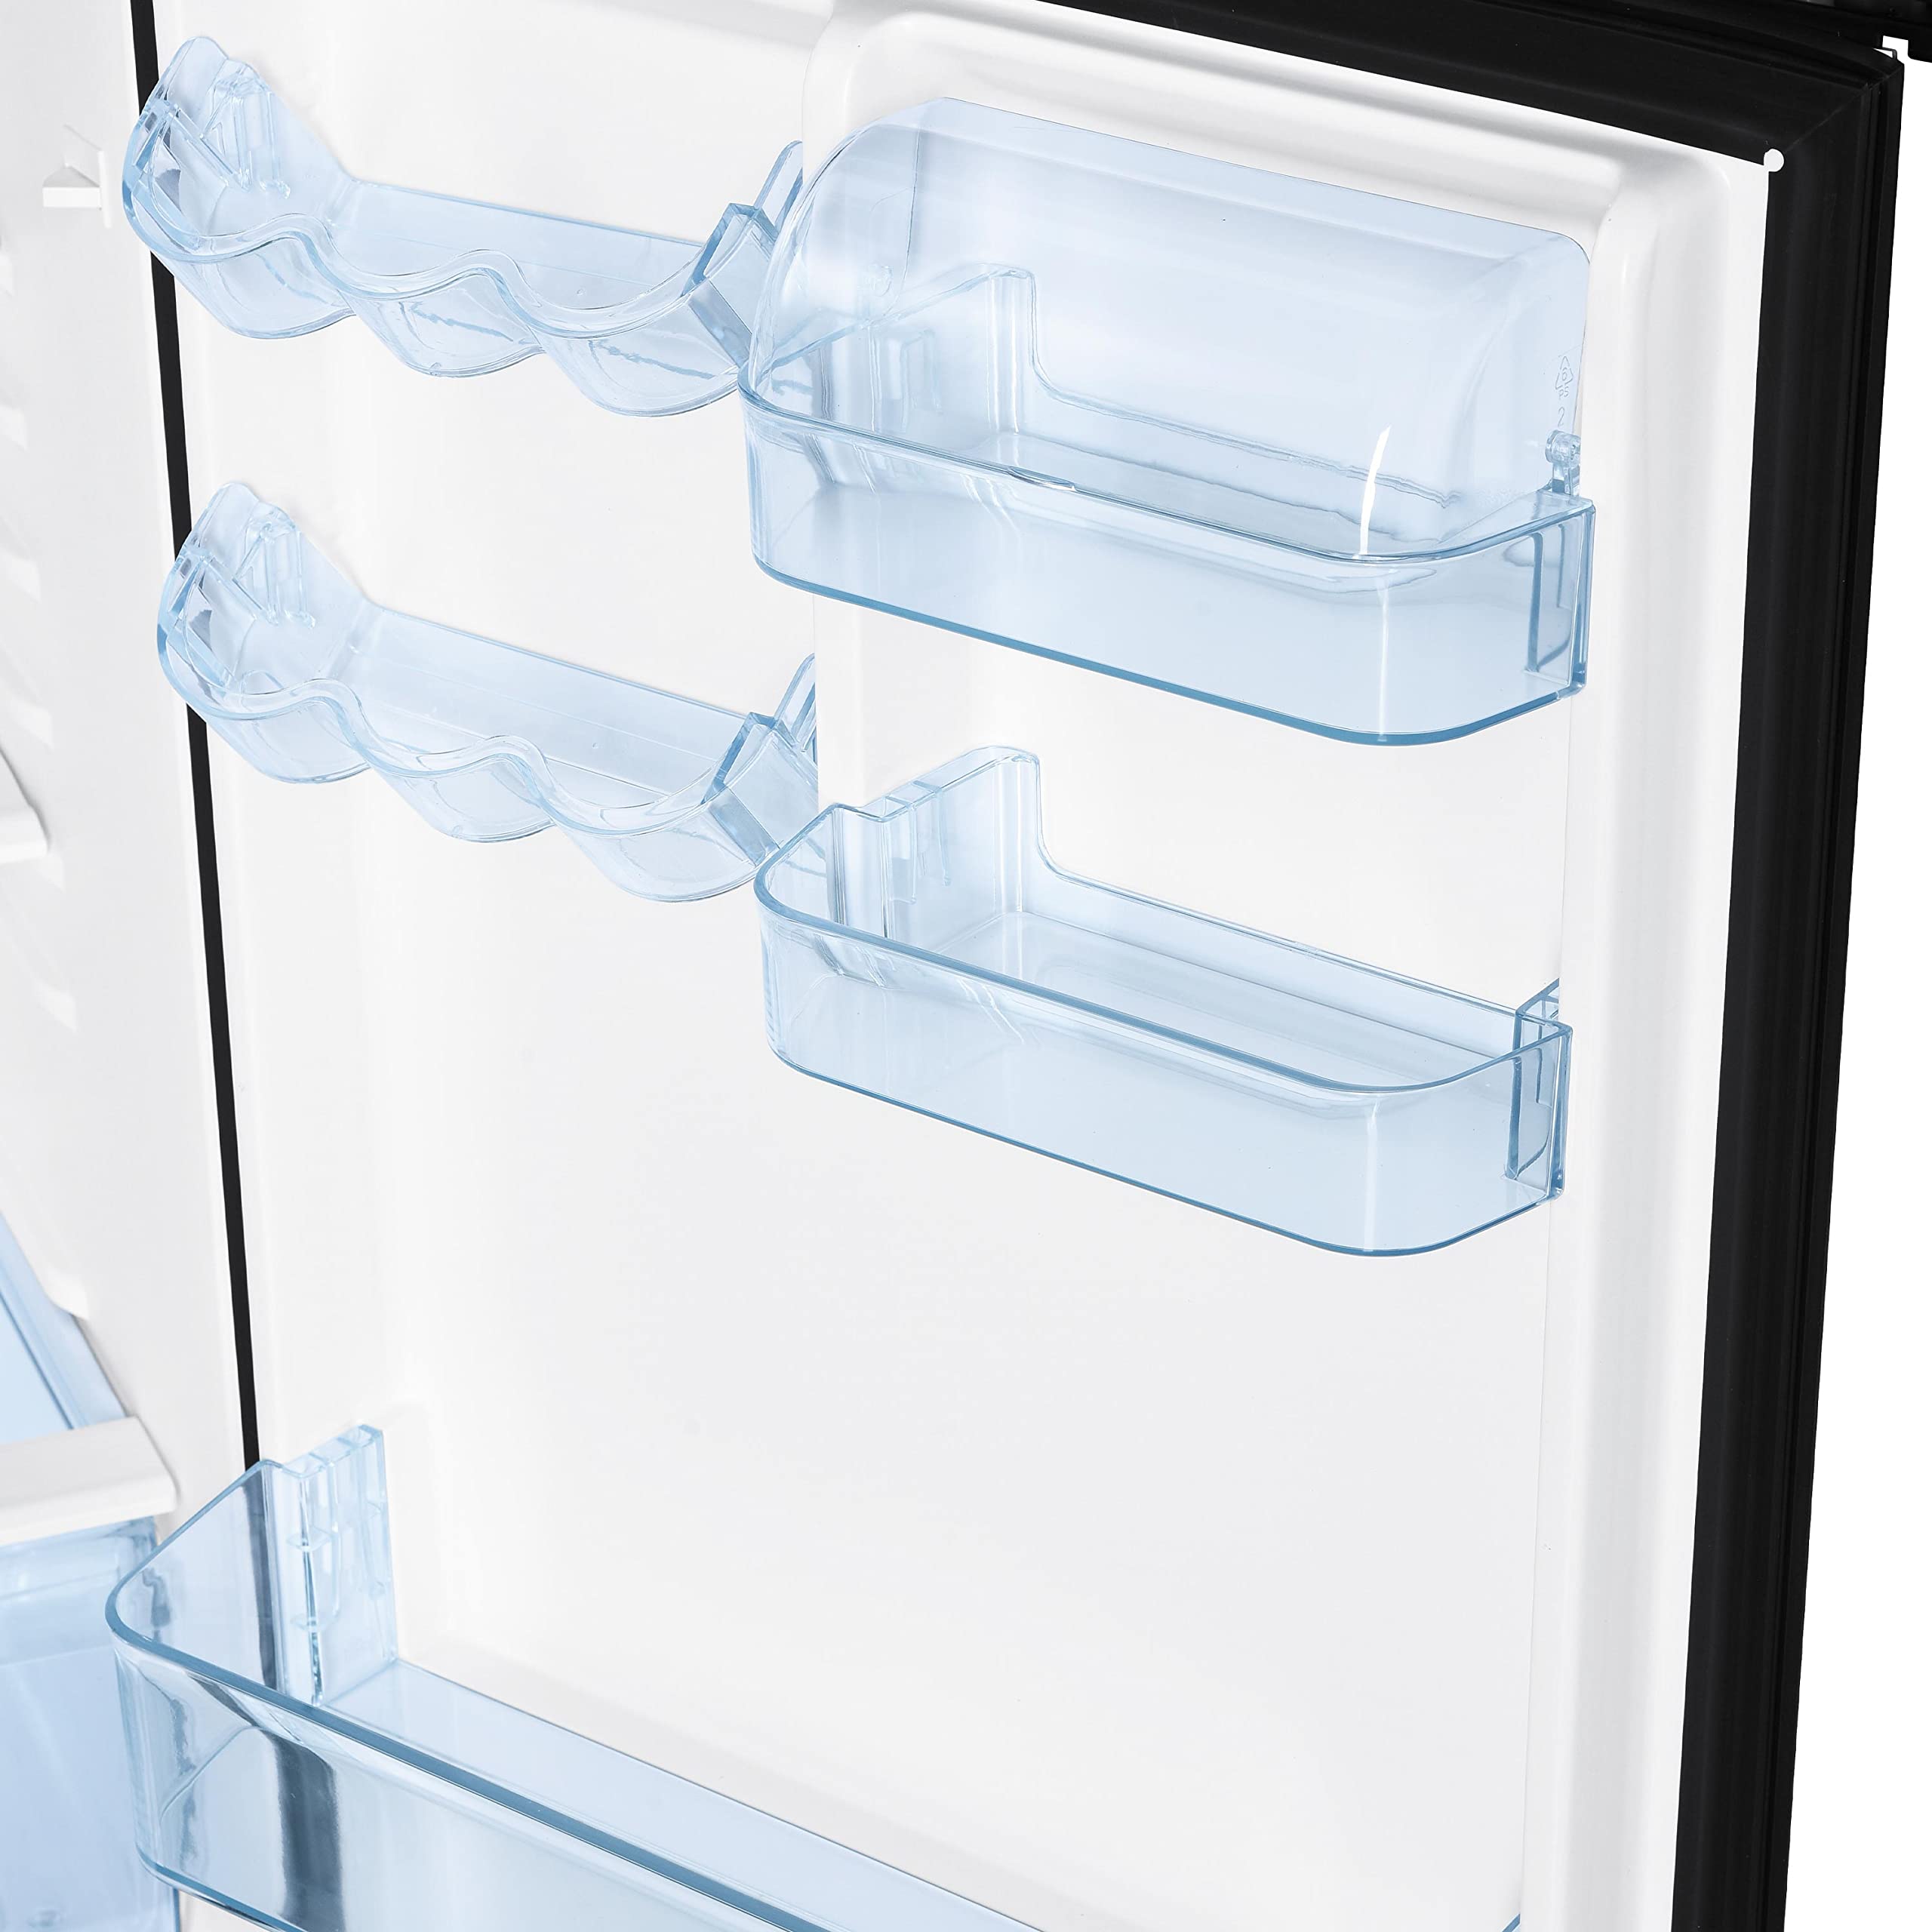 Magic Cool MCR10SI Apartment Refrigerator Freestanding Slim Design Full Fridge with Top Freezer for Condo, House, Small Kitchen Use, Metallic